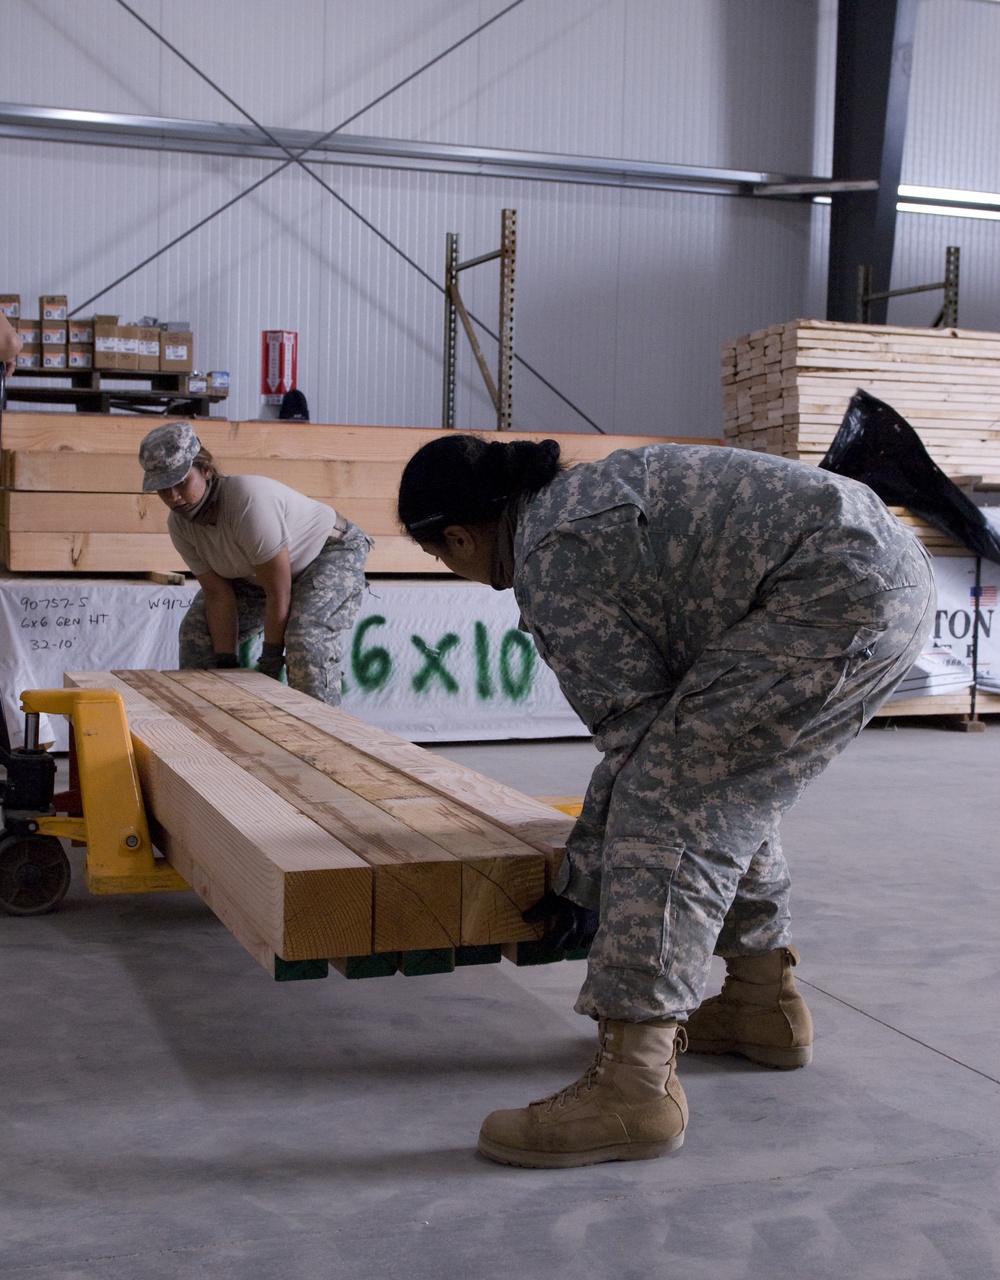 Soldiers supply materials at CSTX 91